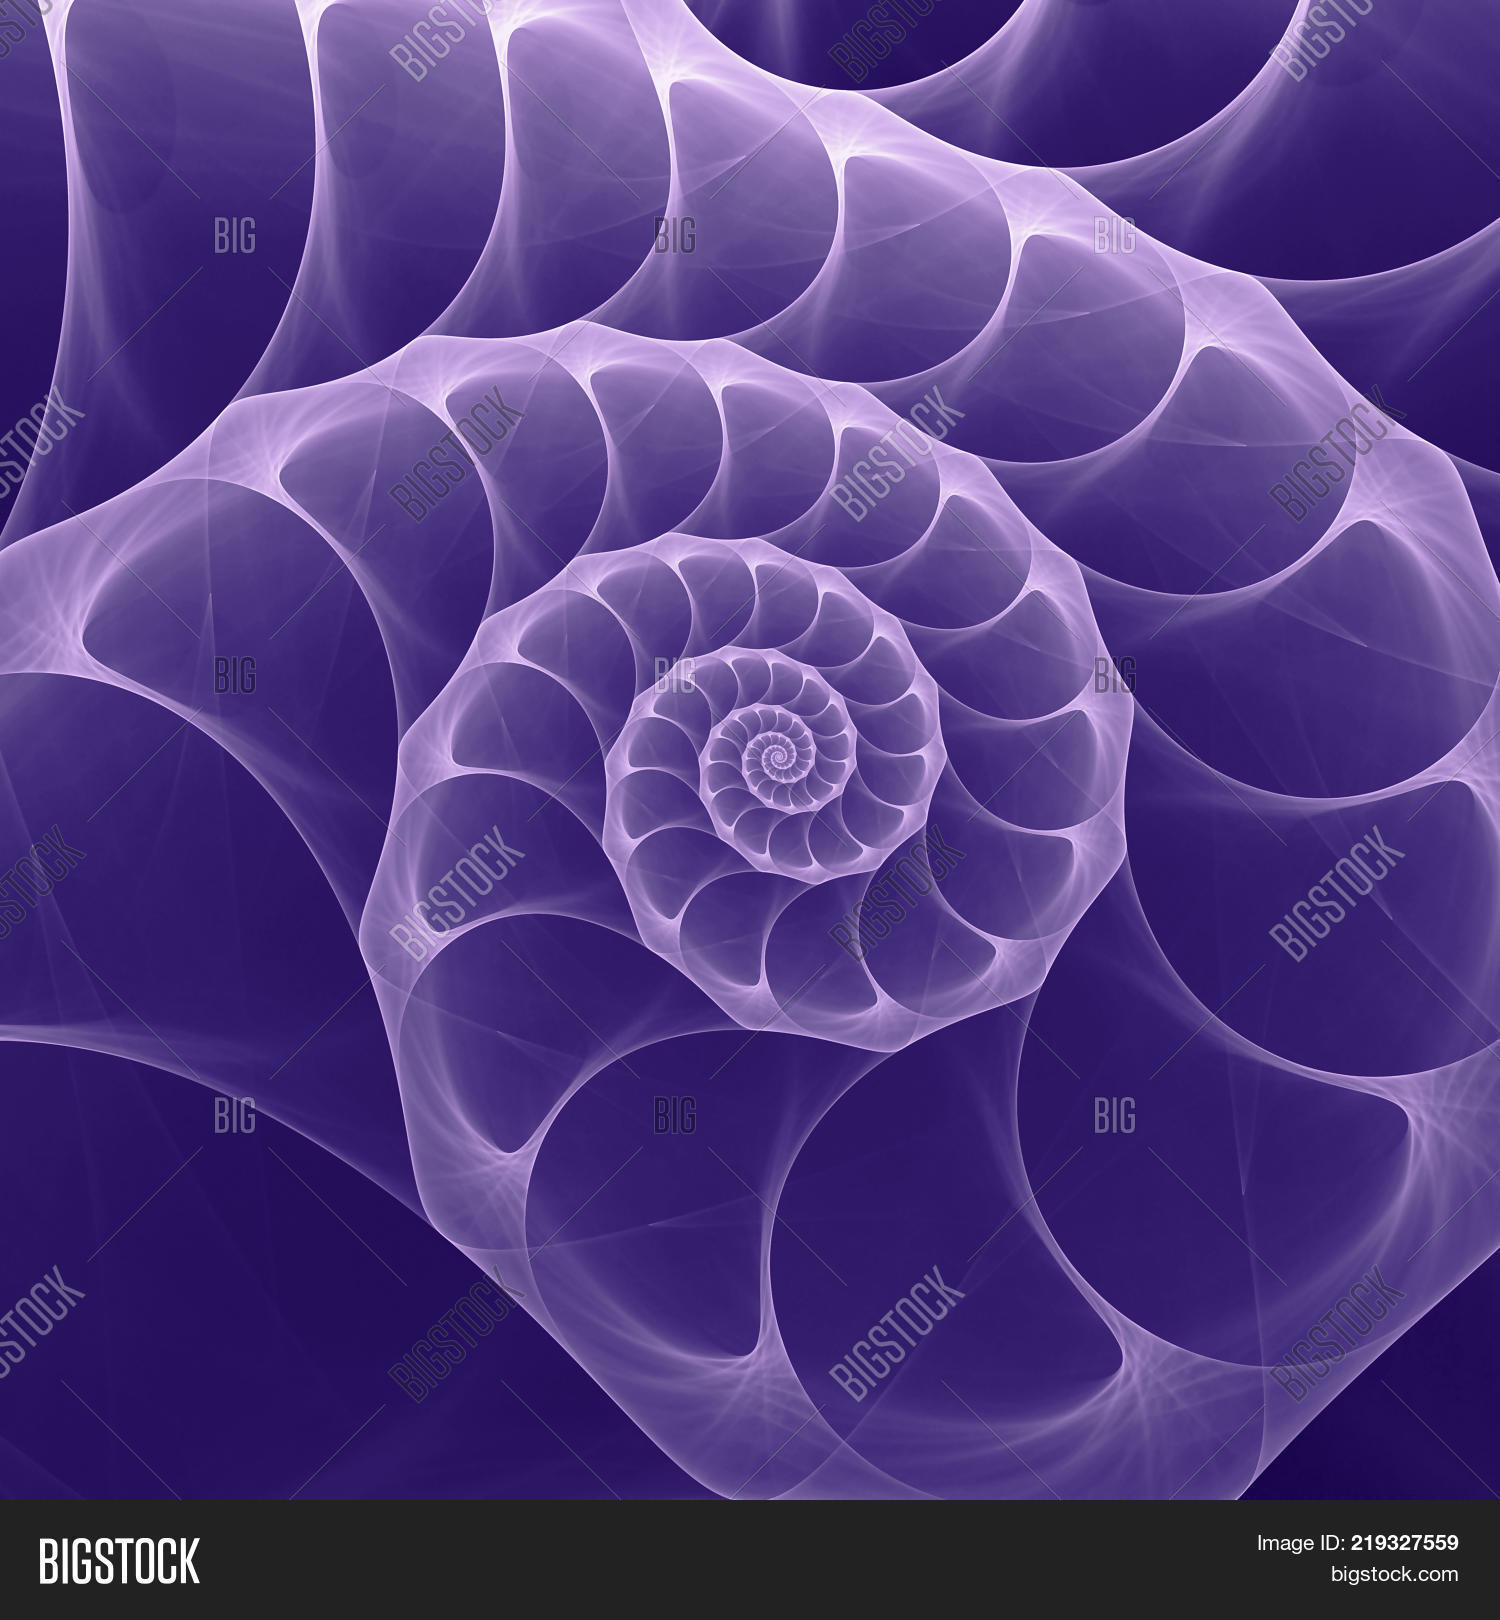 Abstract Fractal Ultraviolet Image & Photo | Bigstock